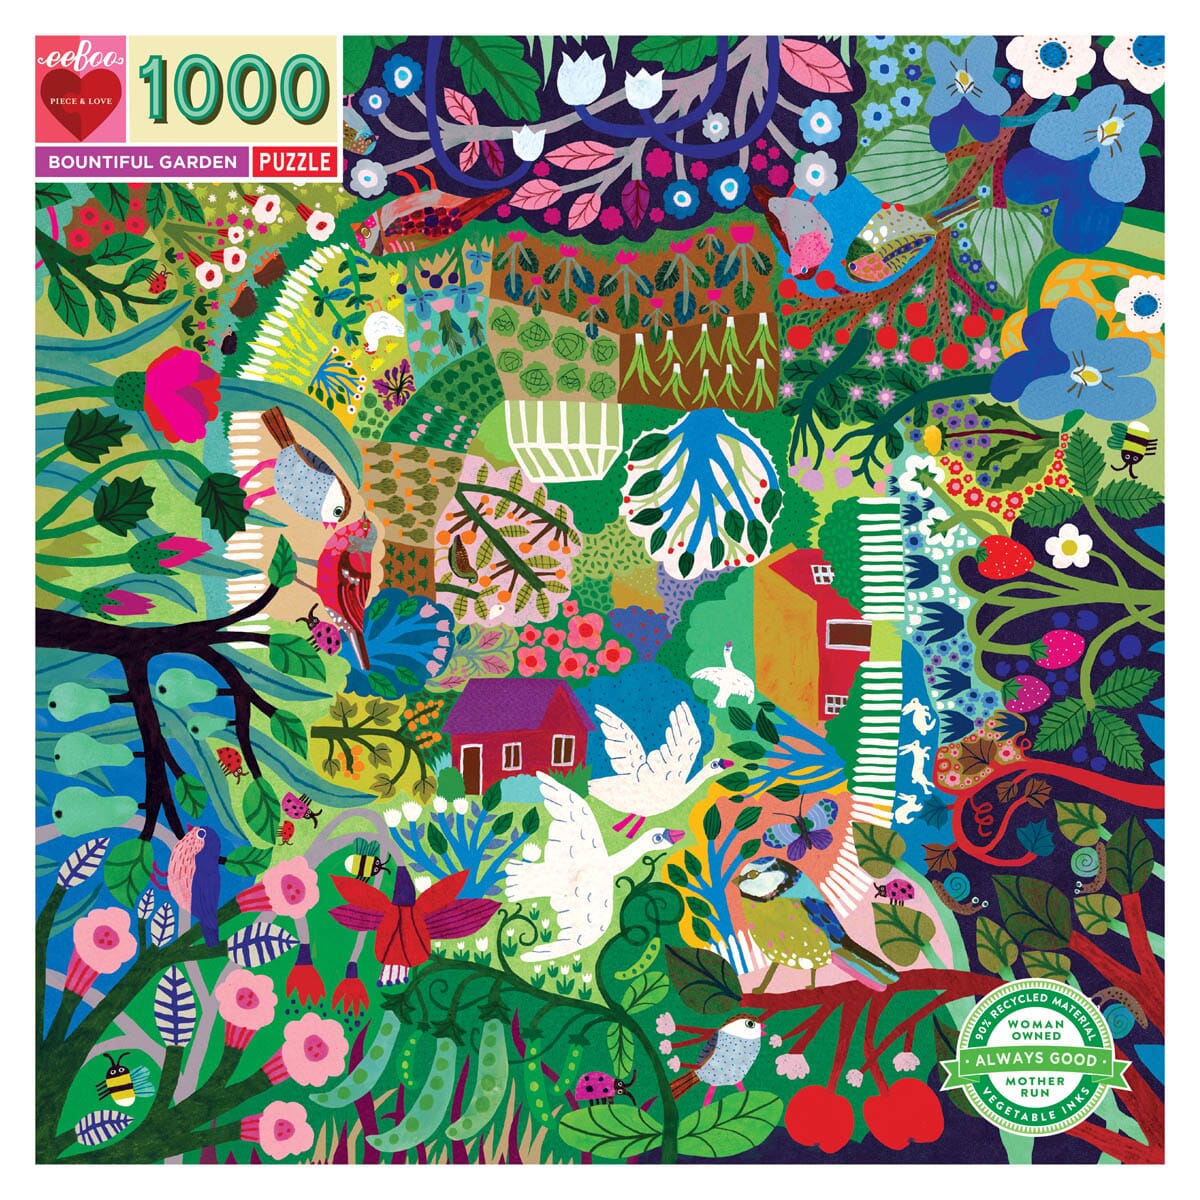 Bountiful Garden Puzzle (1000 piece)